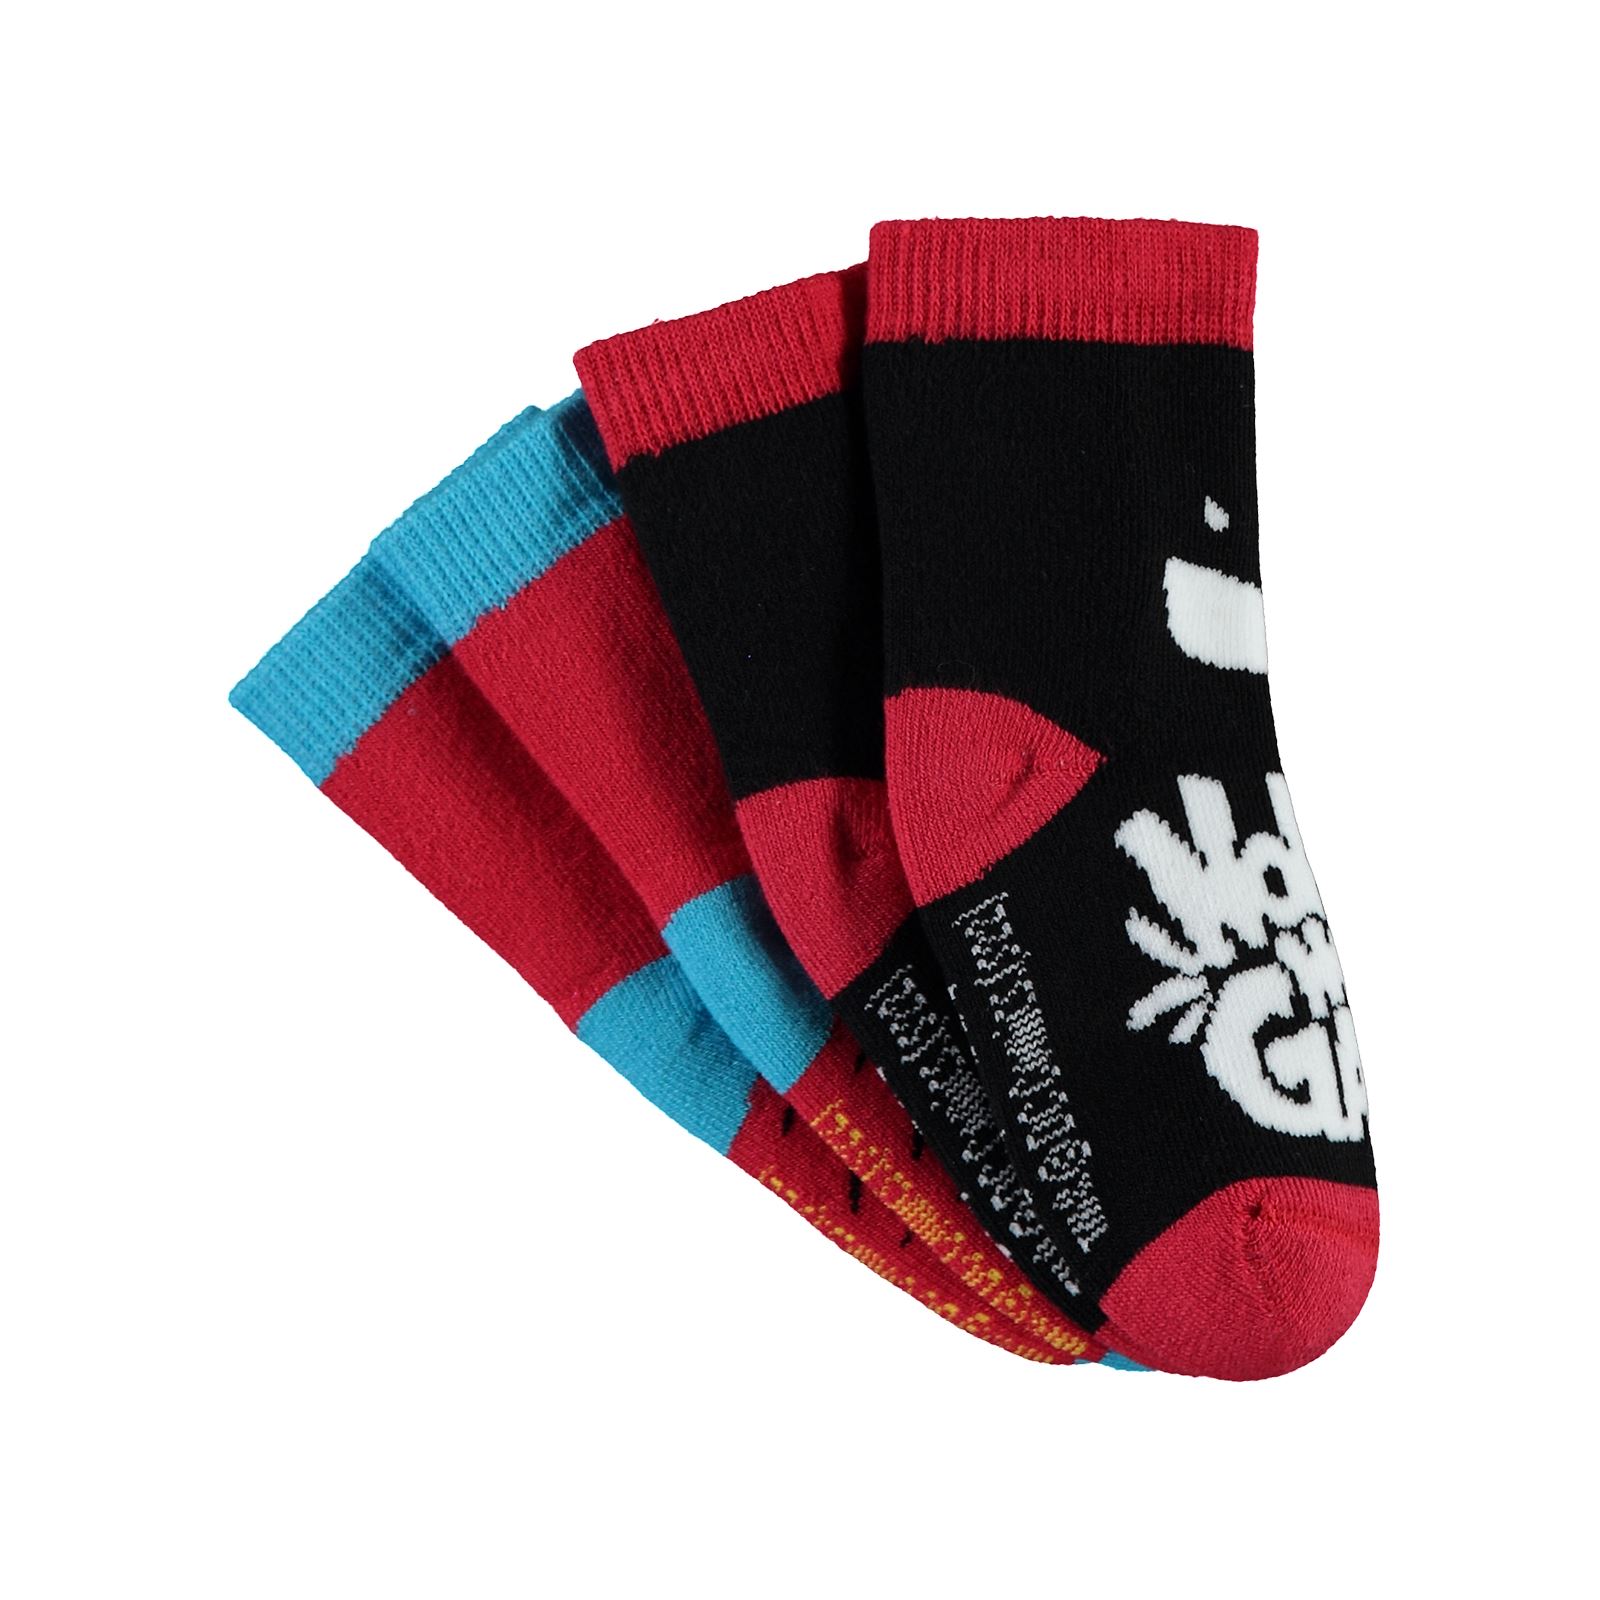 Batman Erkek Bebek 2'li Havlu Çorap Set 0-18 Ay Kırmızı